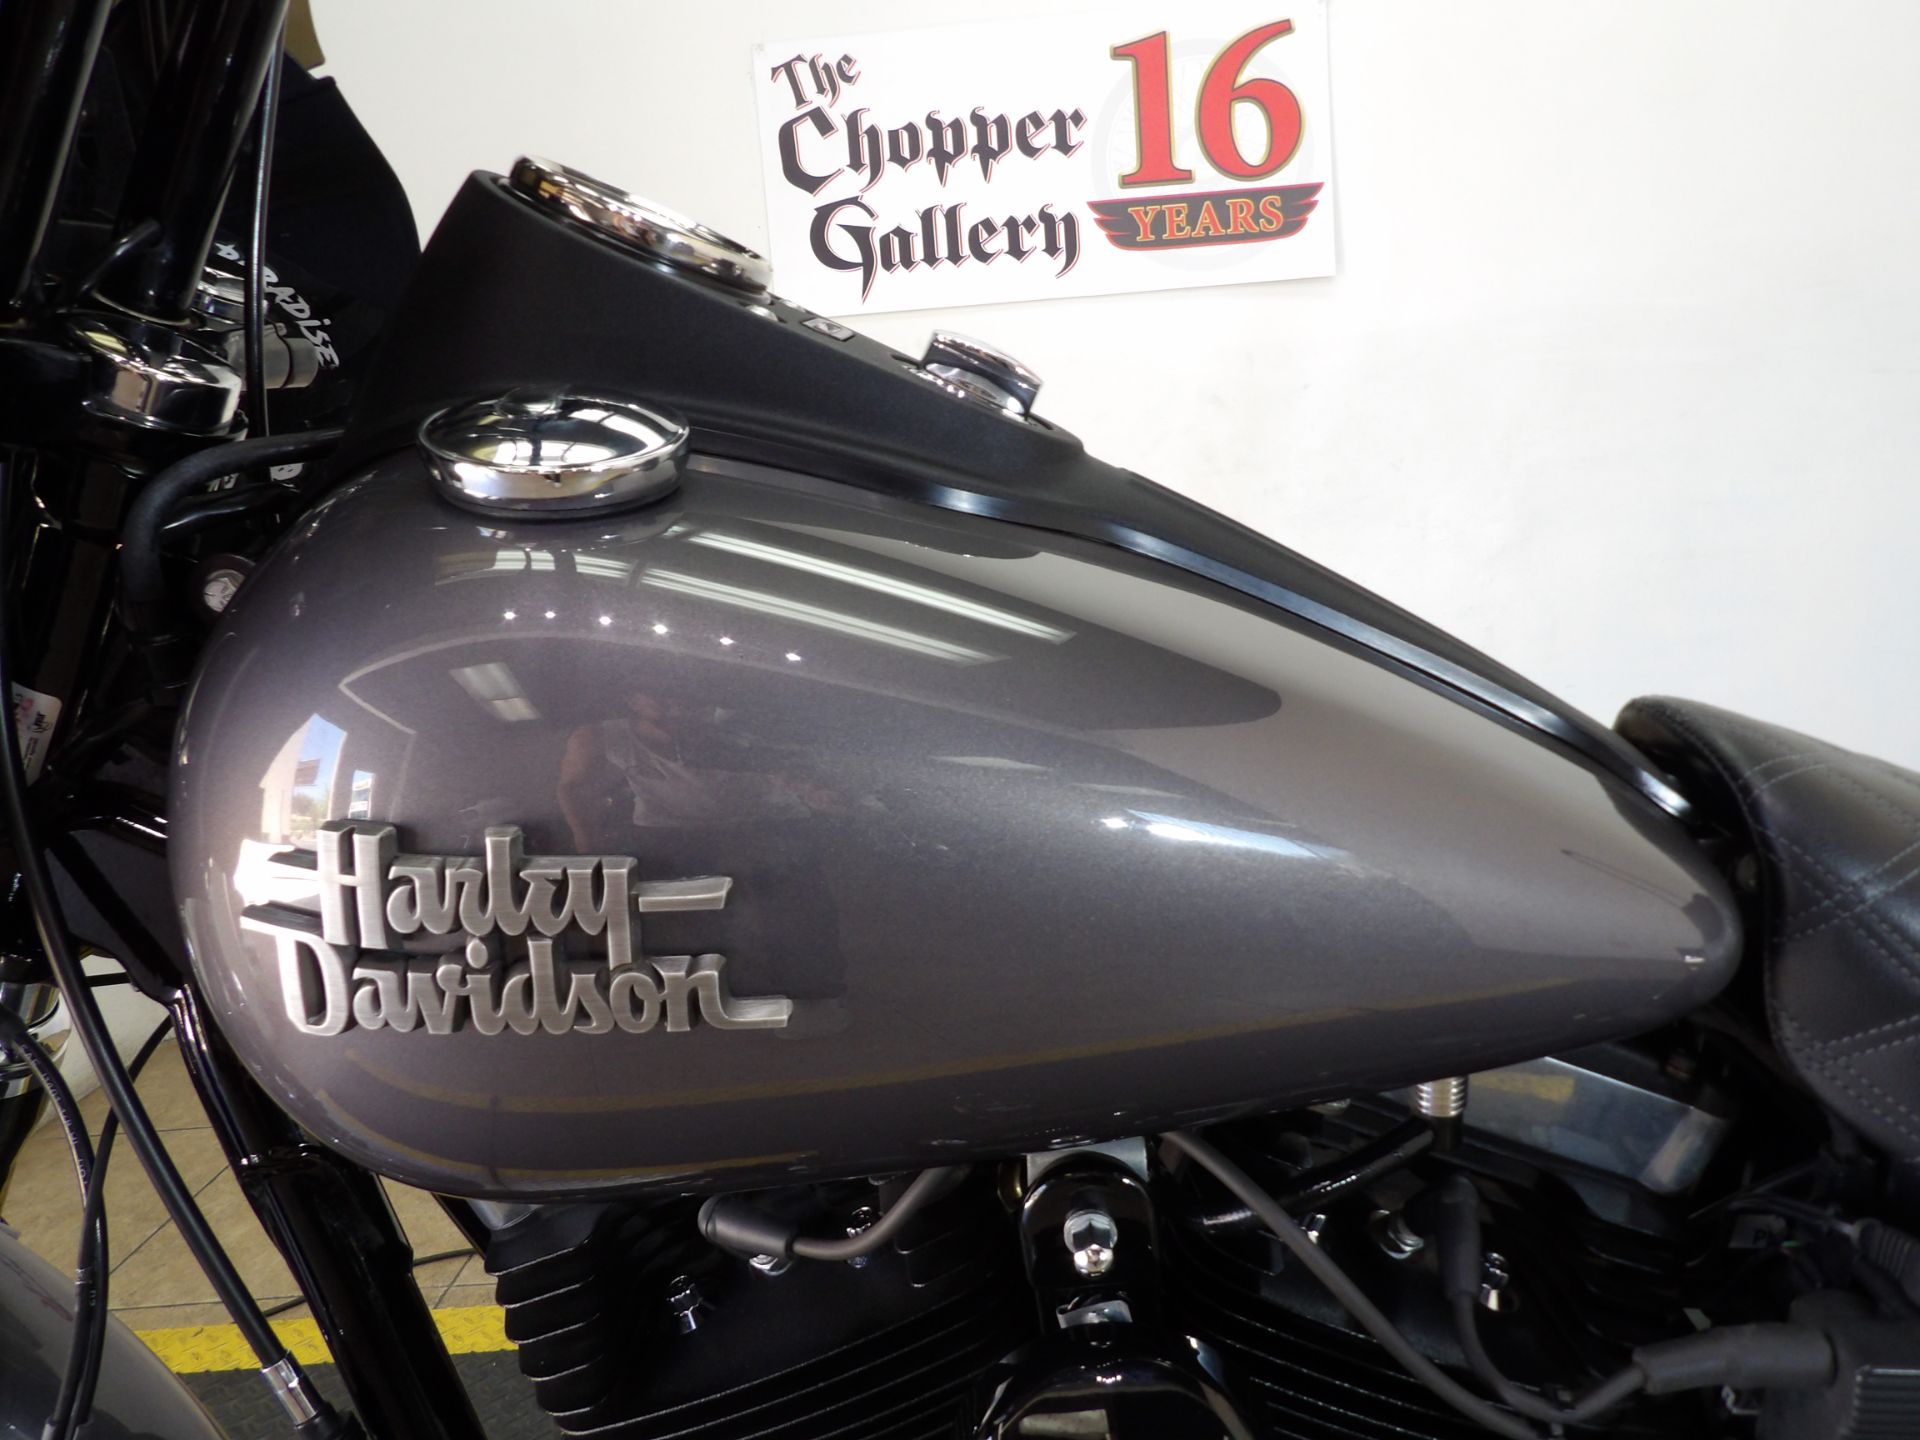 2016 Harley-Davidson Street Bob® in Temecula, California - Photo 12